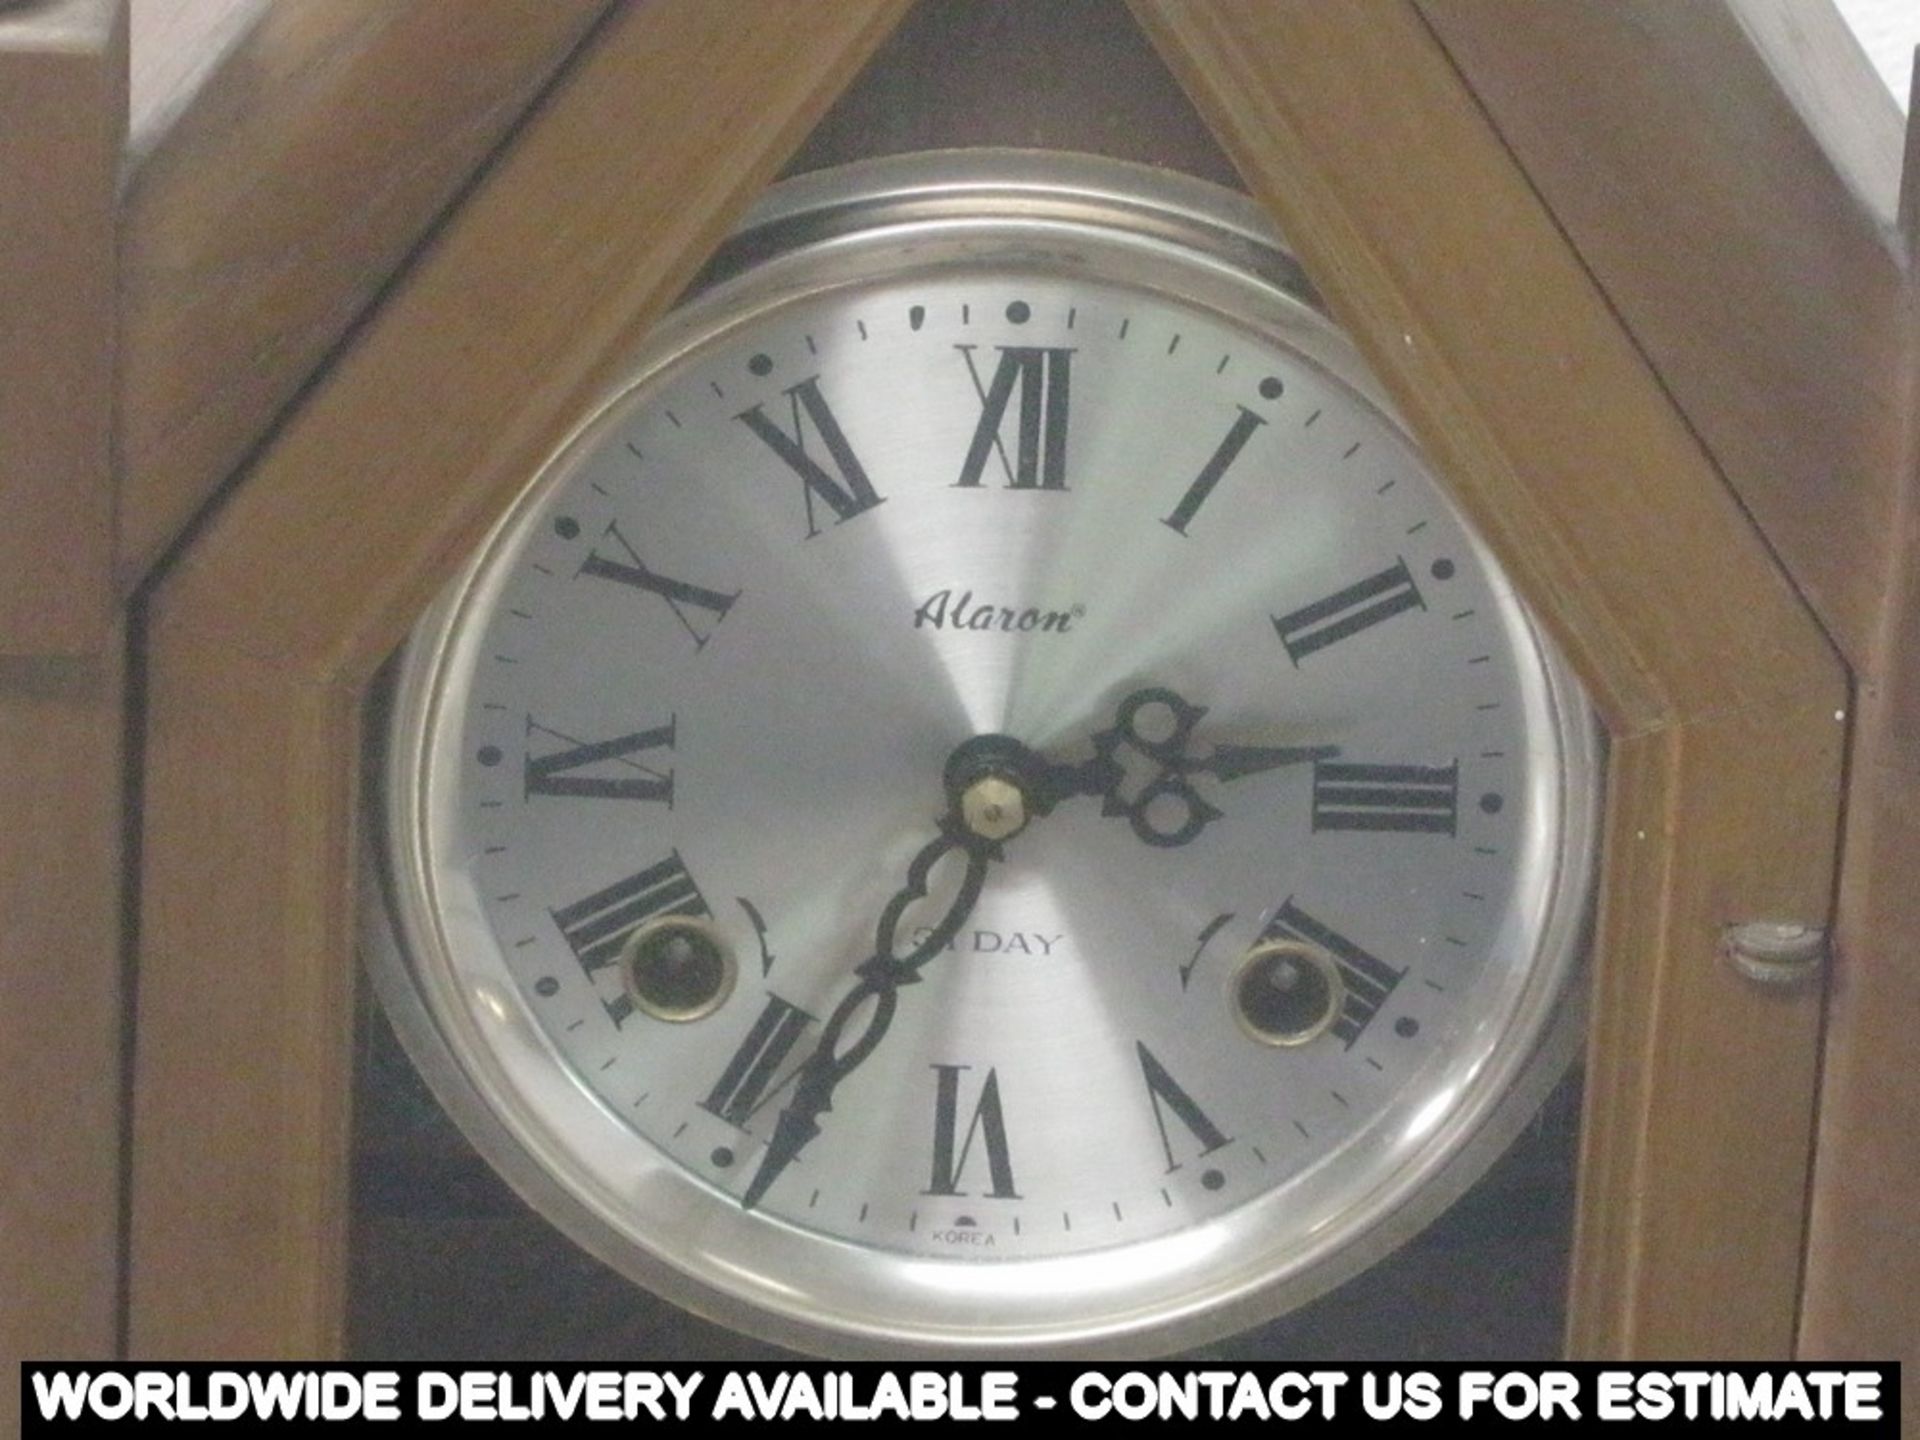 Gothic mantle clock - Alaron 31 day - Image 2 of 3